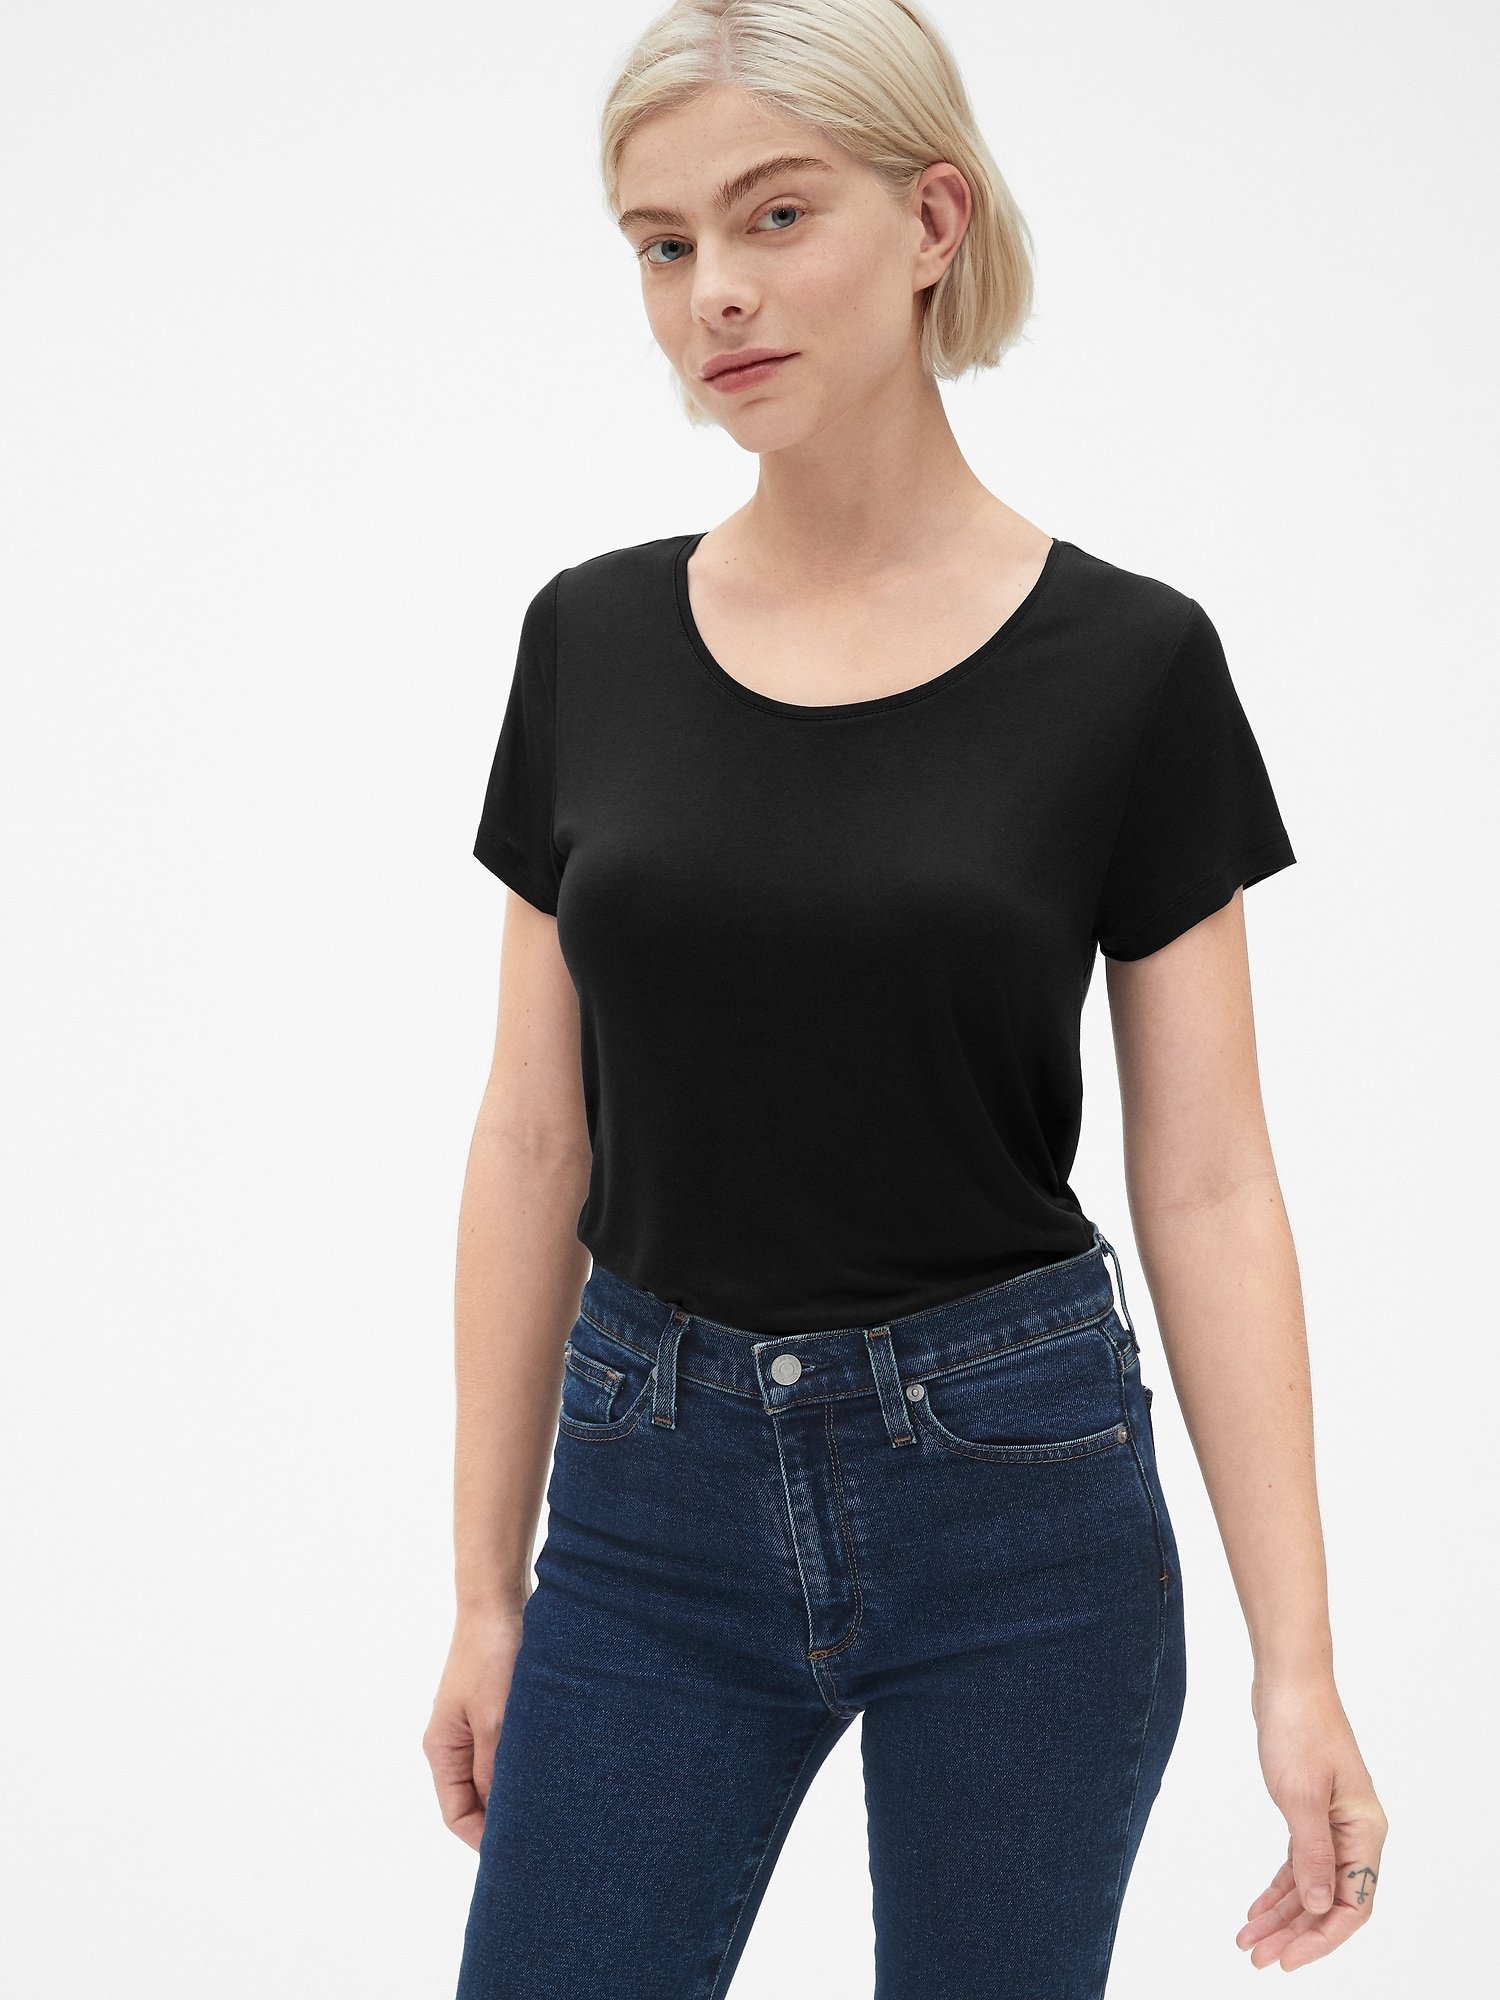 Kadın Kısa Kollu Jarse T-Shirt product image